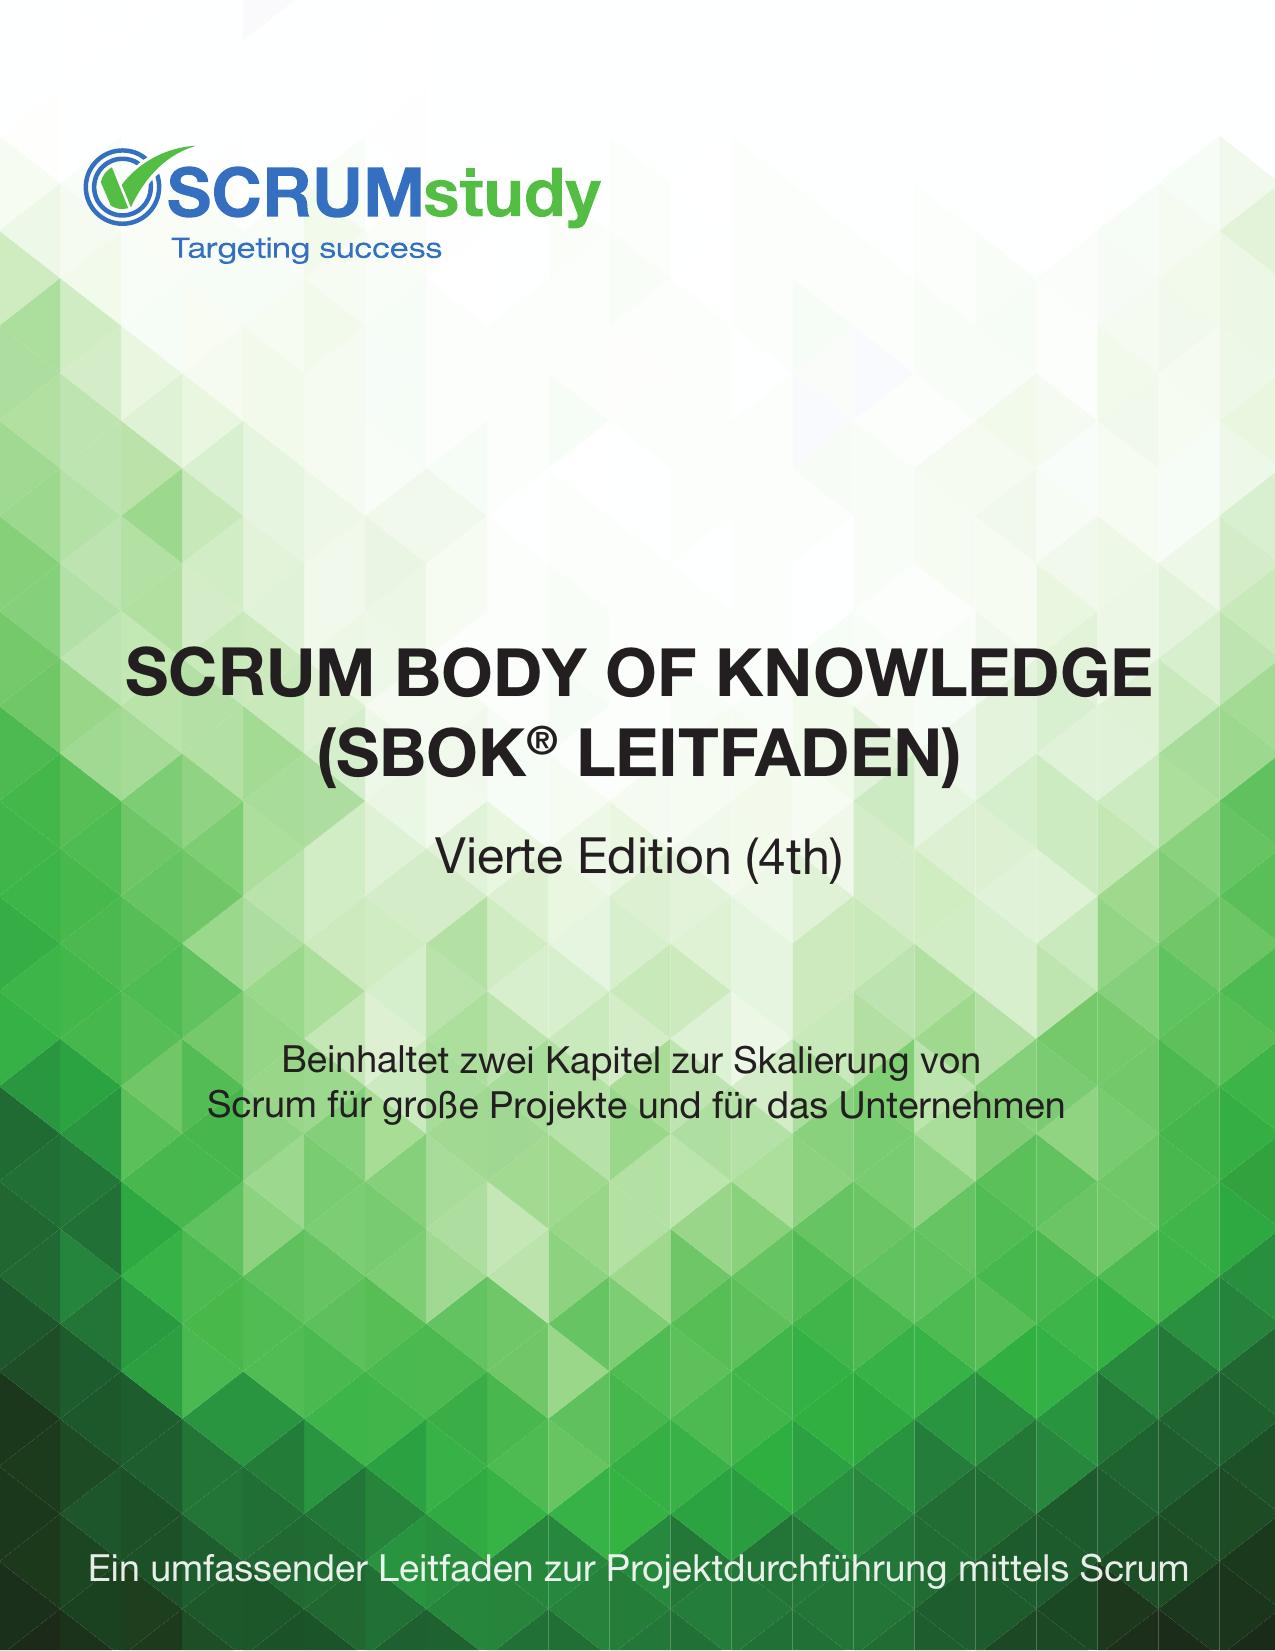 SCRUMstudy-SBOK-Guide-4th-Edition-German